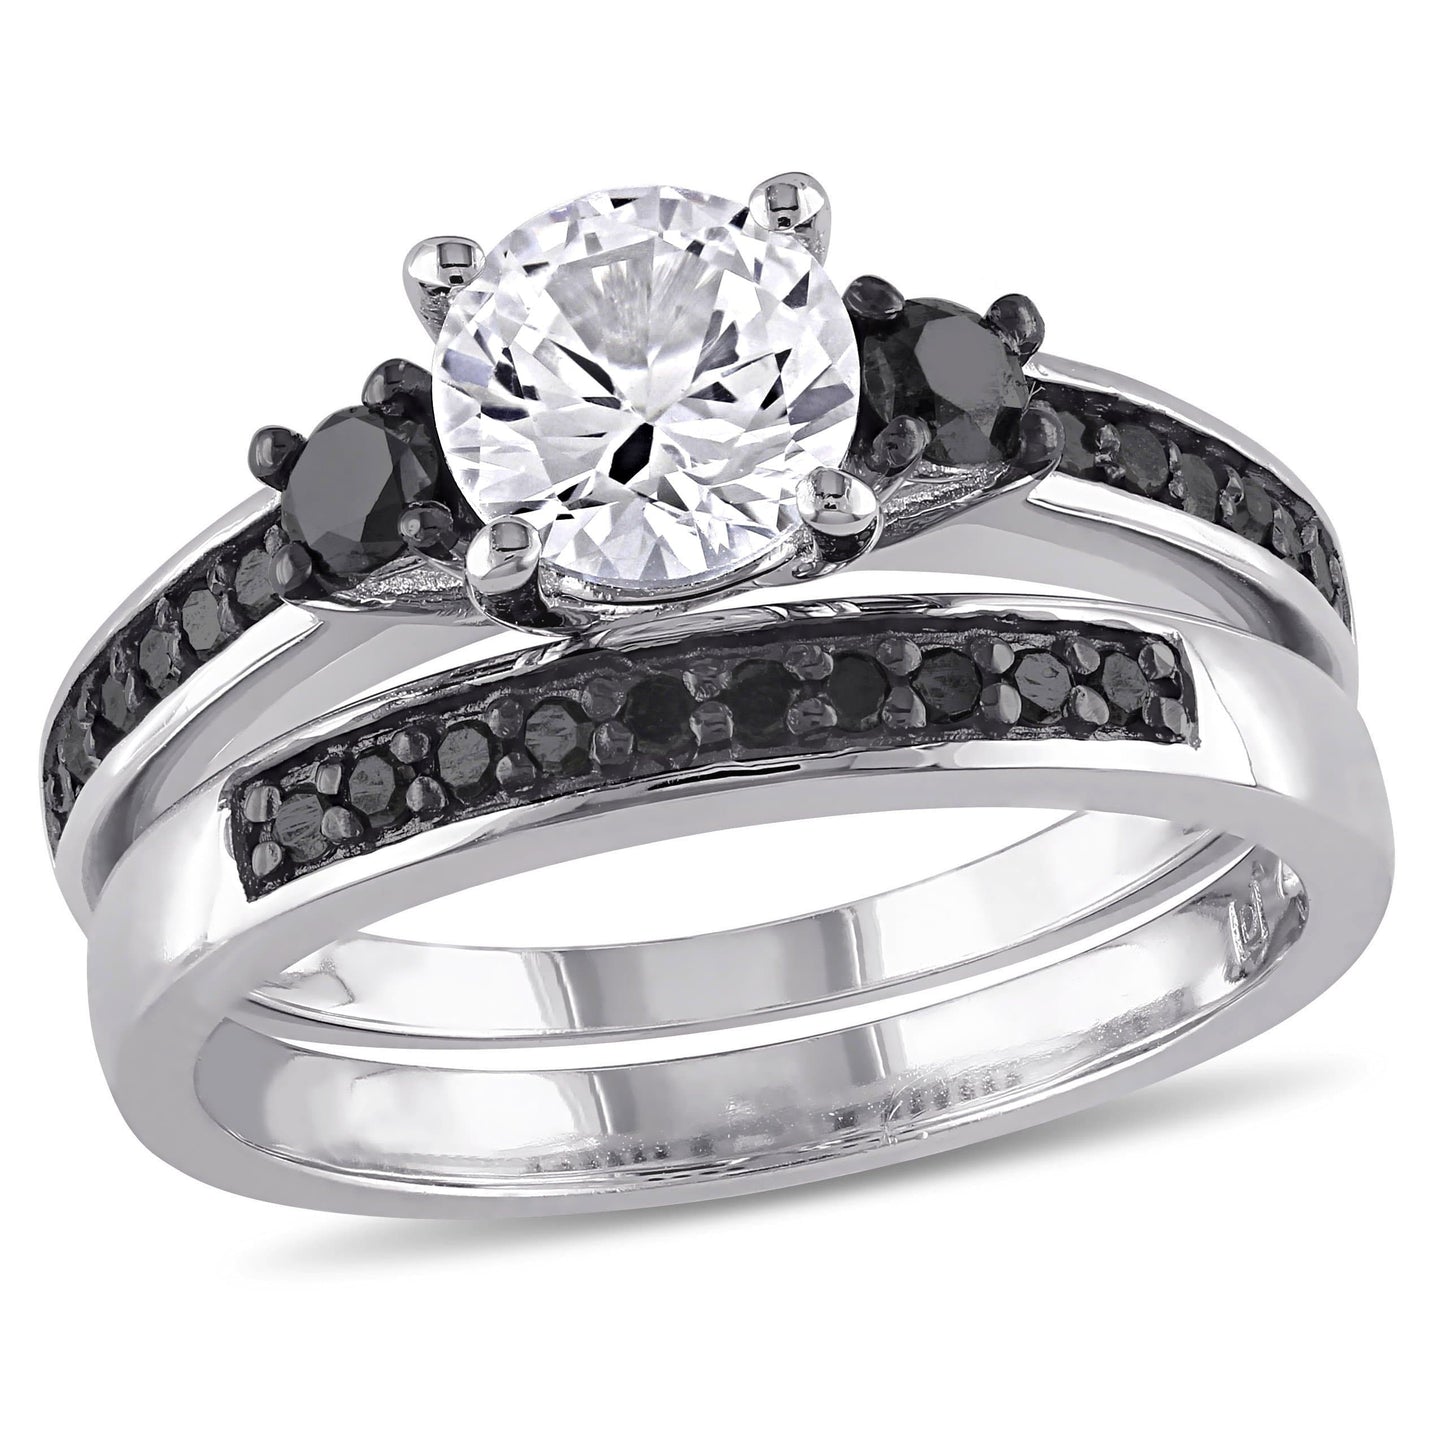 Black Diamond & White Sapphire Ring Set in Sterling Silver